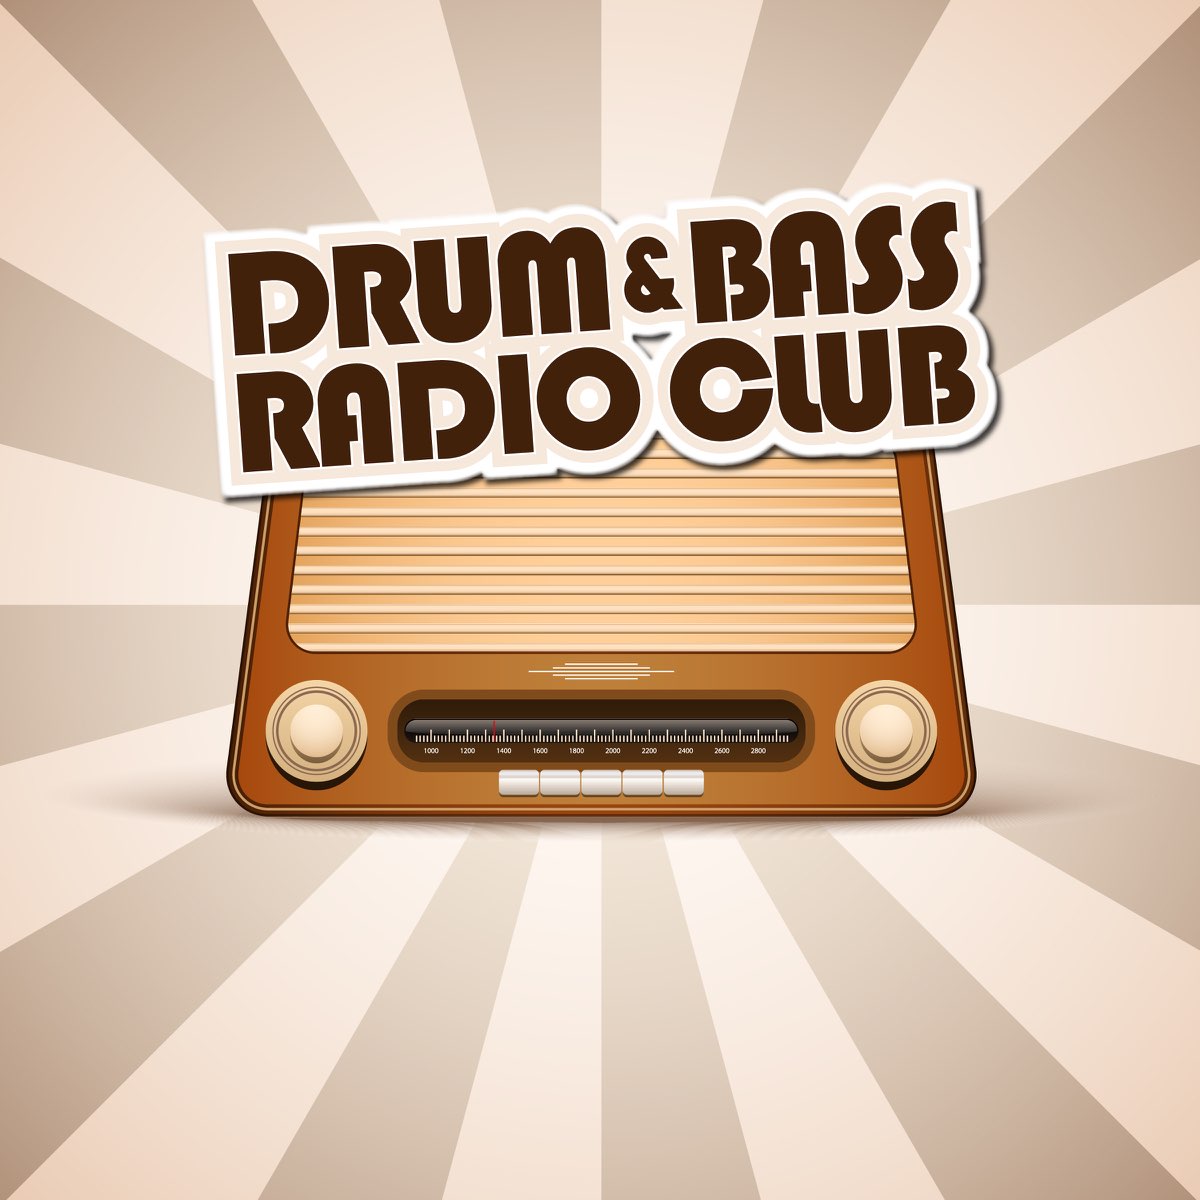 Drum & Bass Radio Club - Album by Various Artists - Apple Music